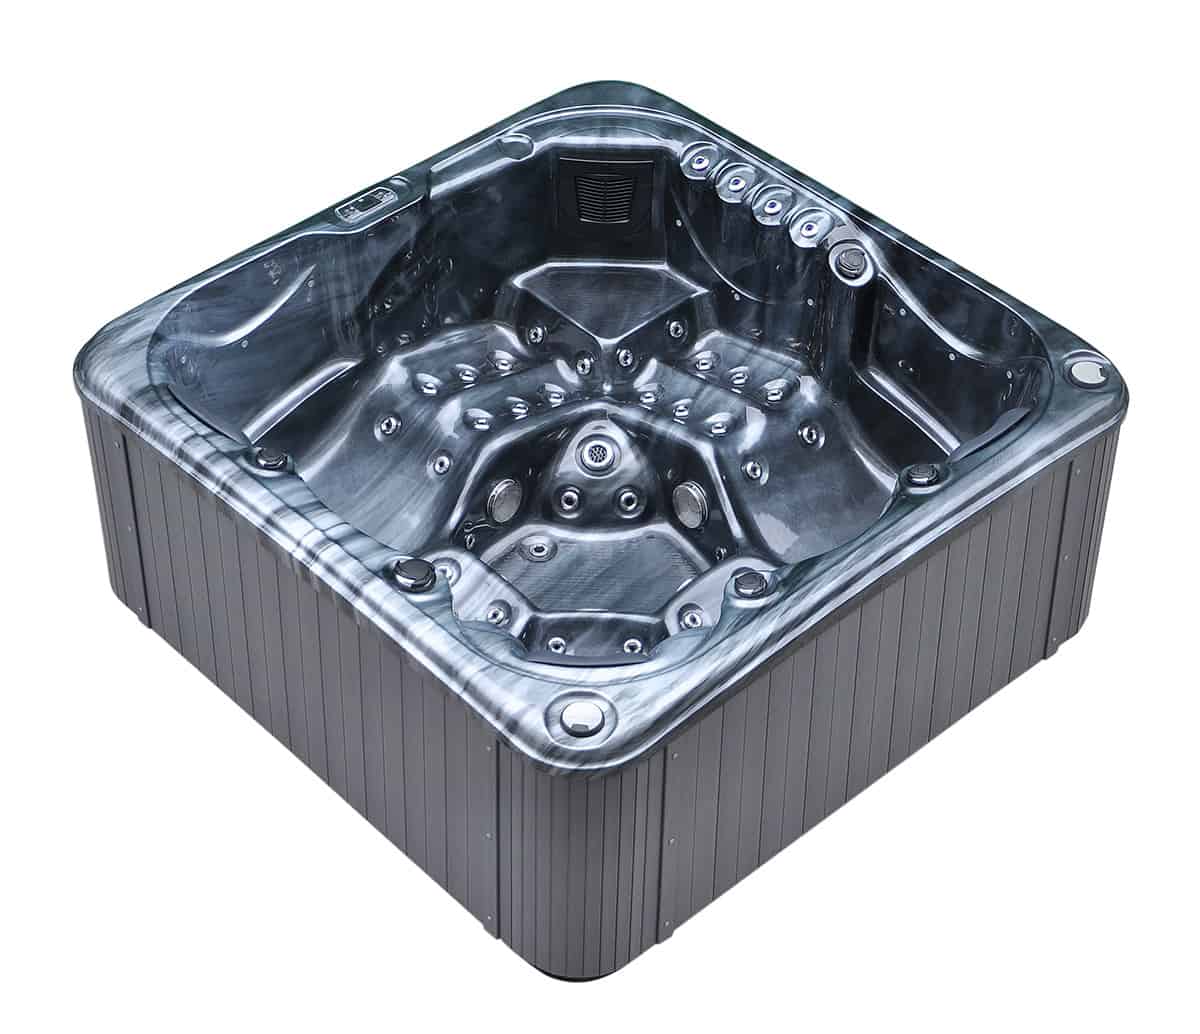 Hydro Kettering hot tub